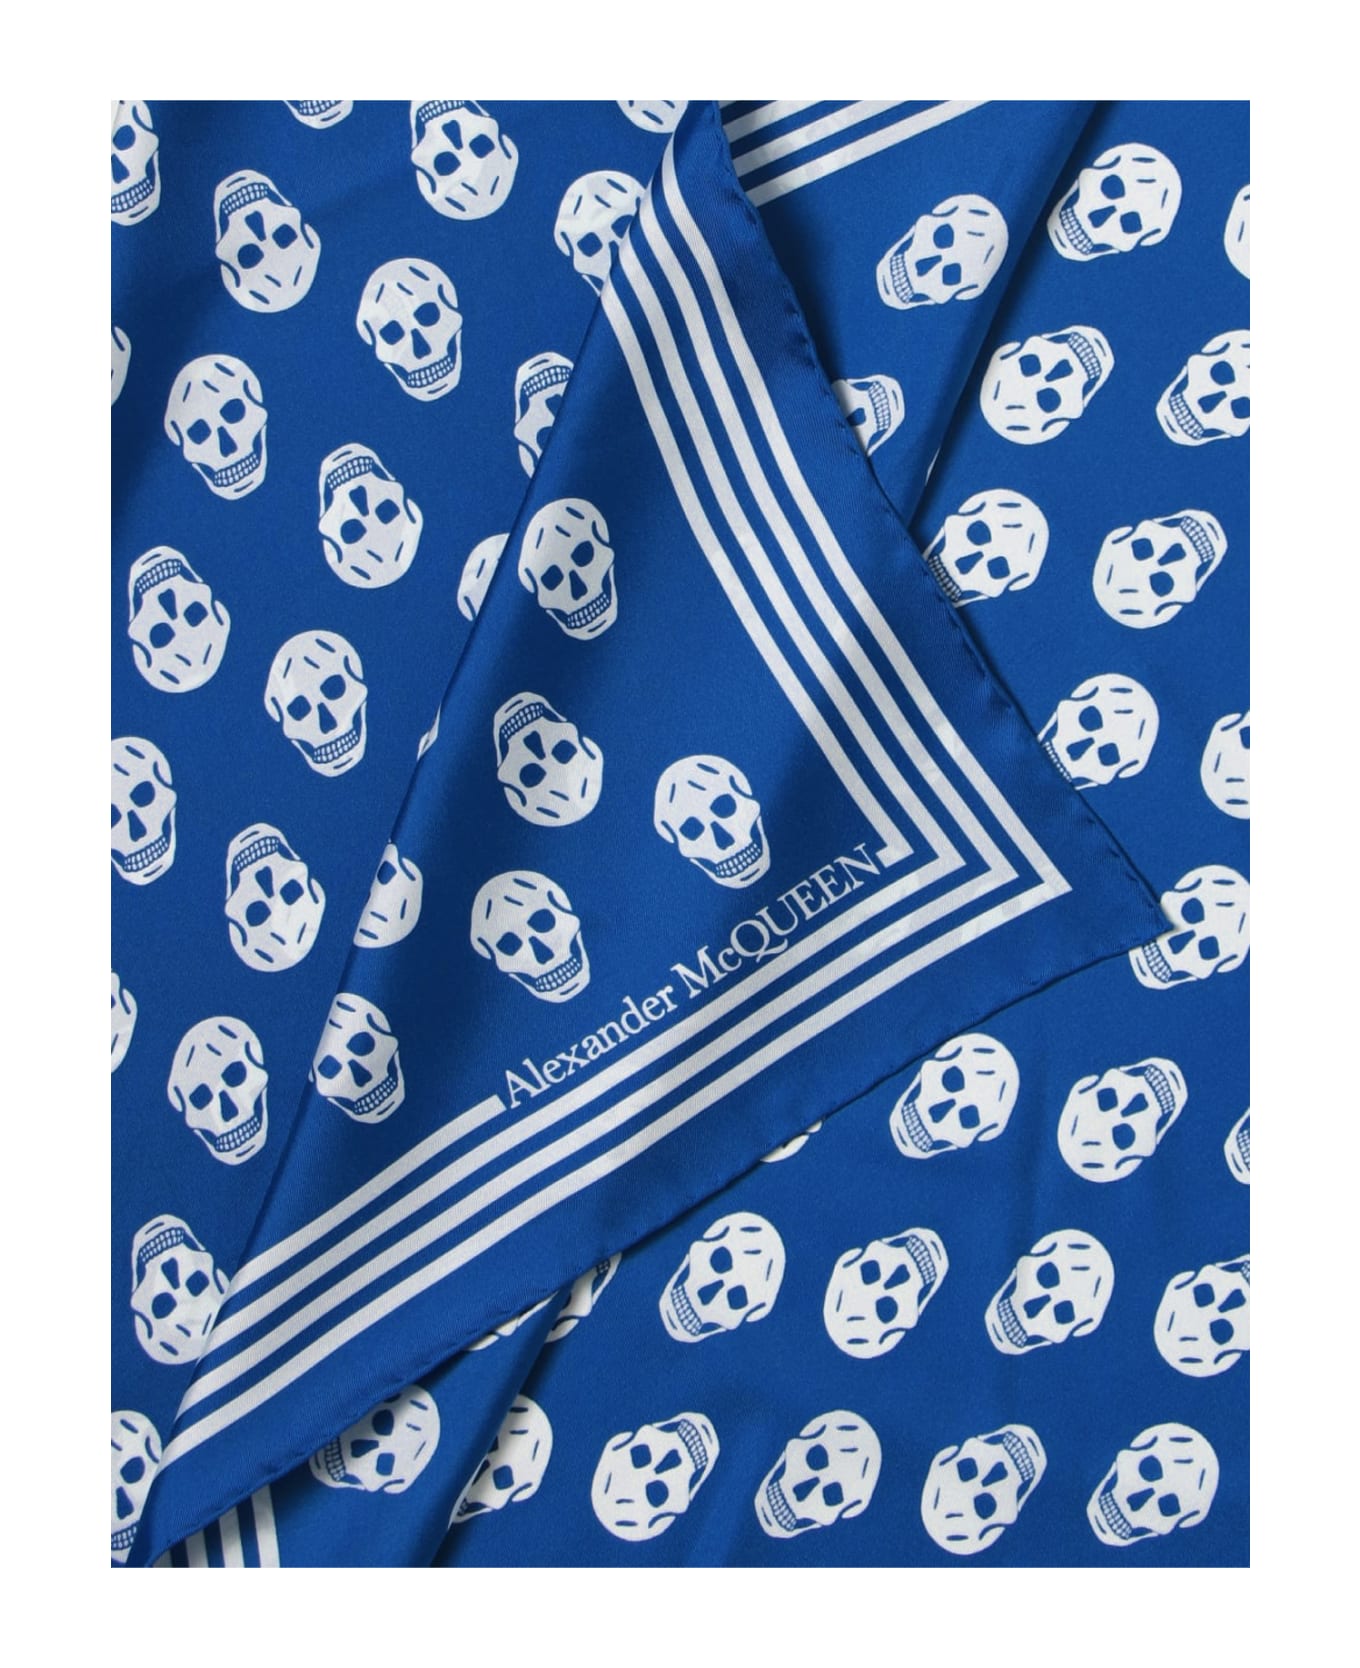 Alexander McQueen Royal Blue Silk Scarf With Skull Motif - Blu スカーフ